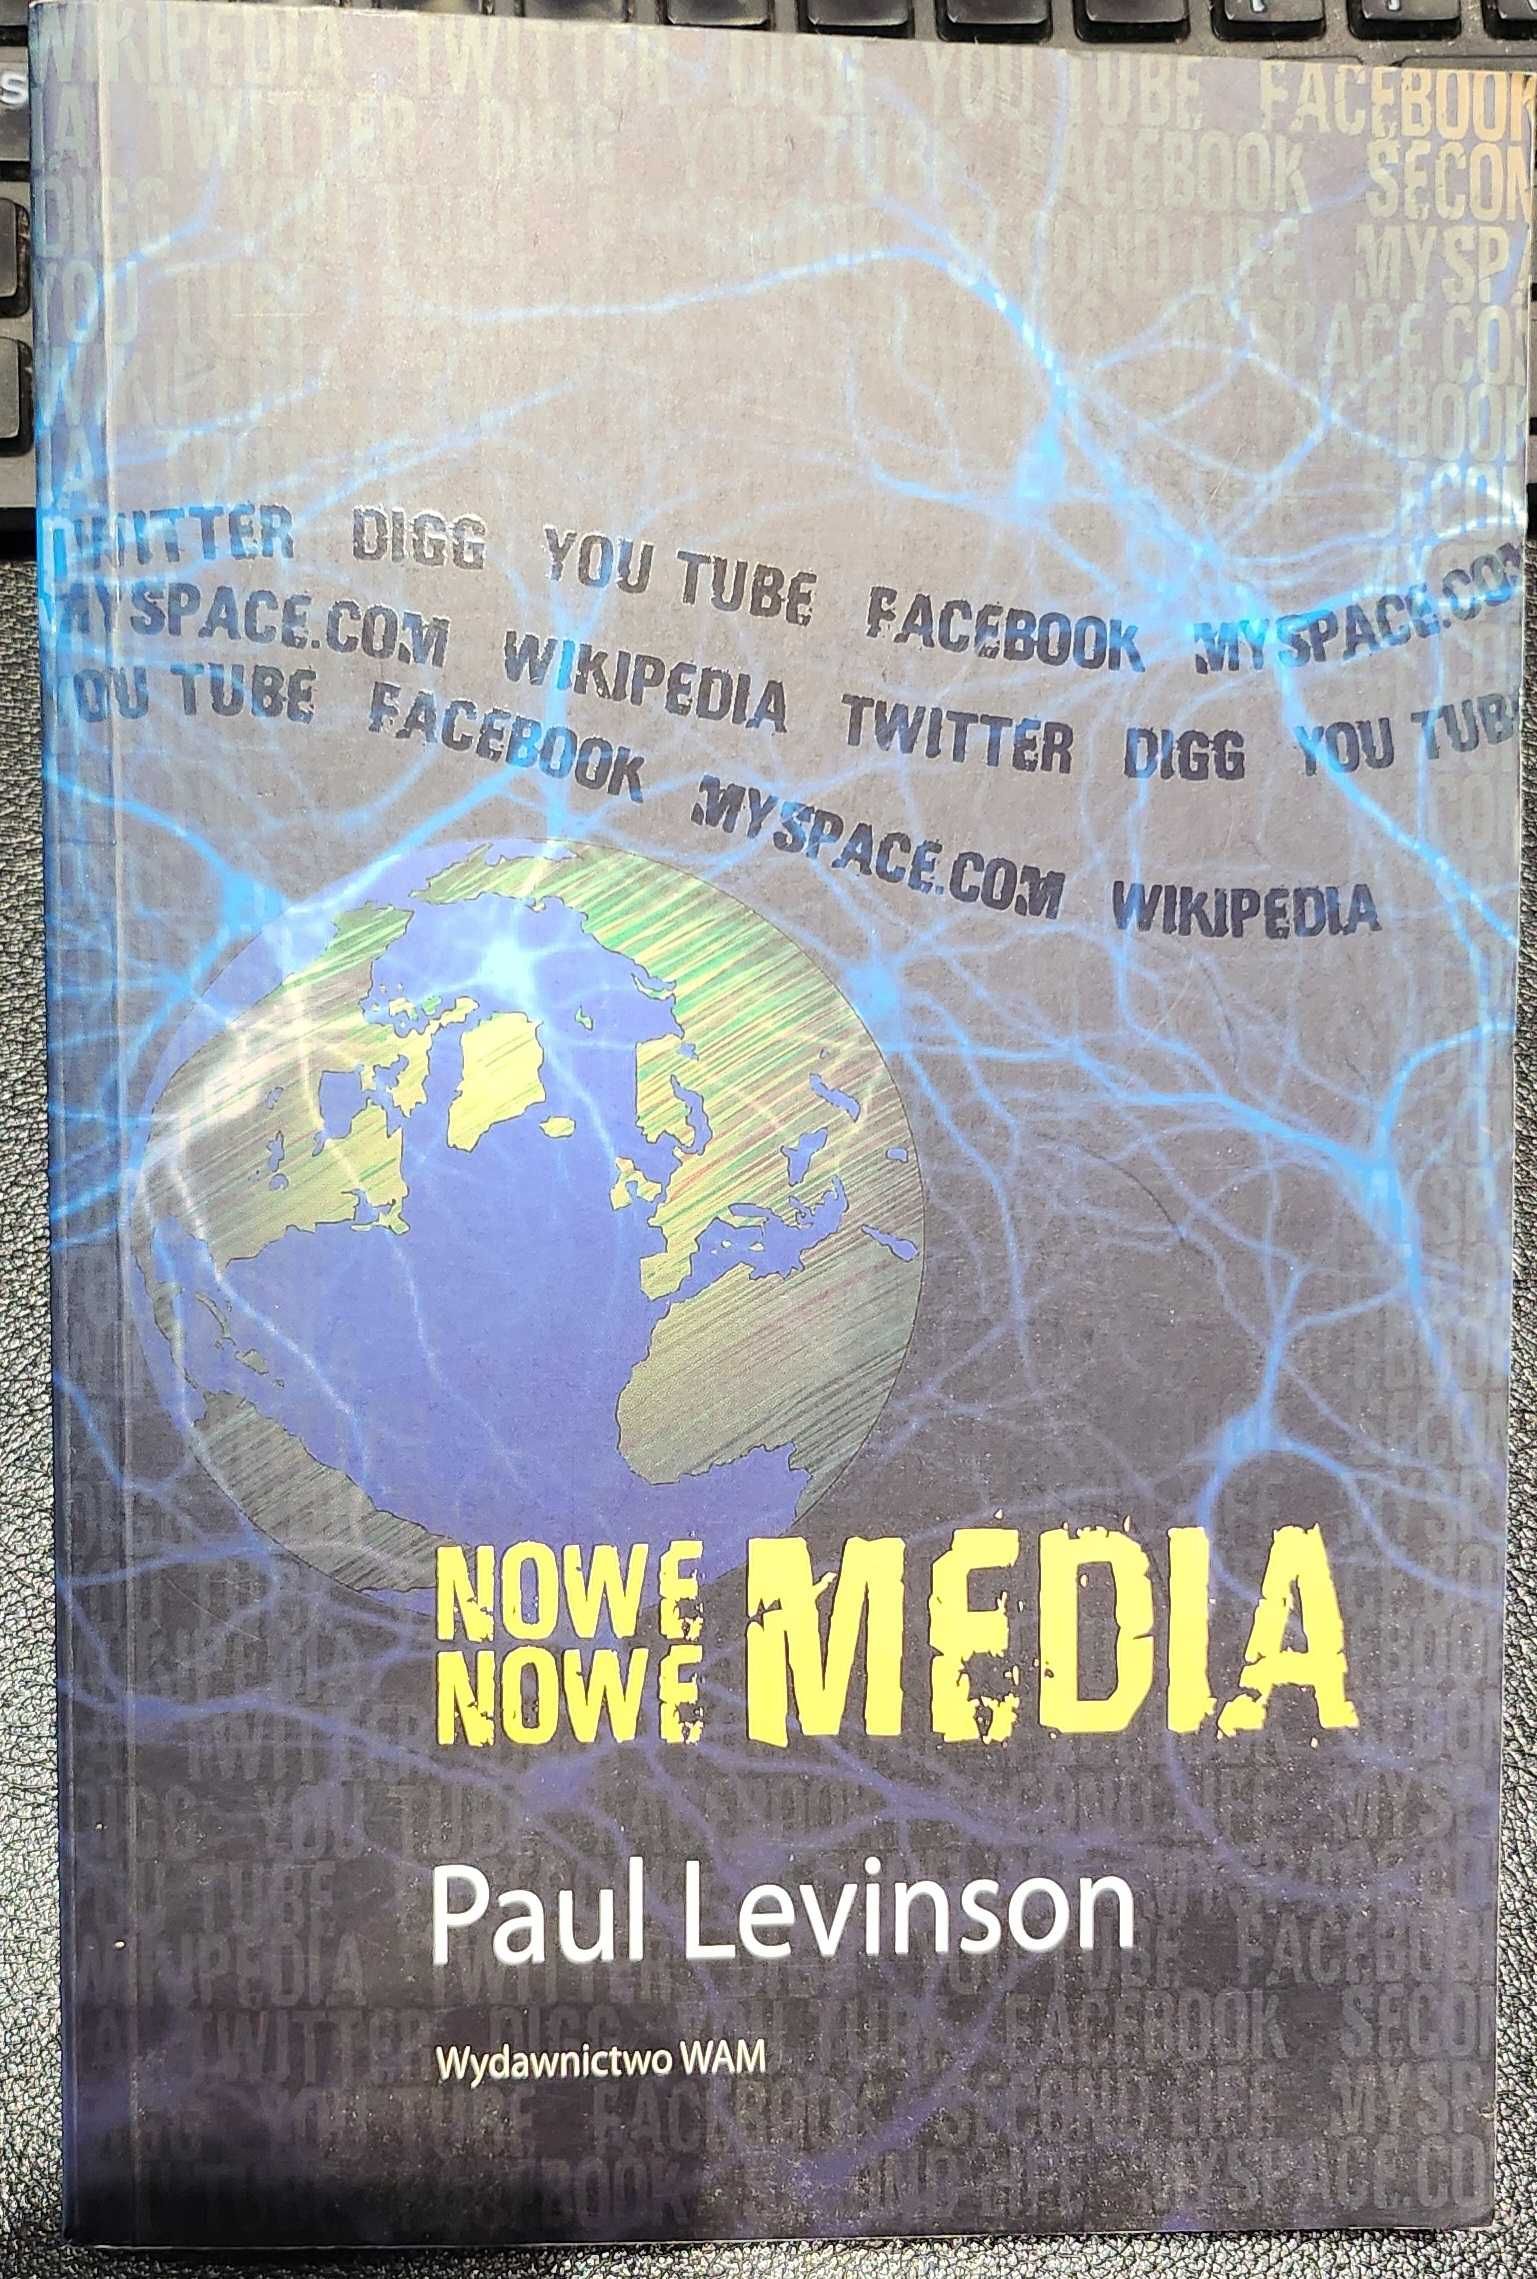 Nowe media, Paul Levinson, wydawnictwo WAM